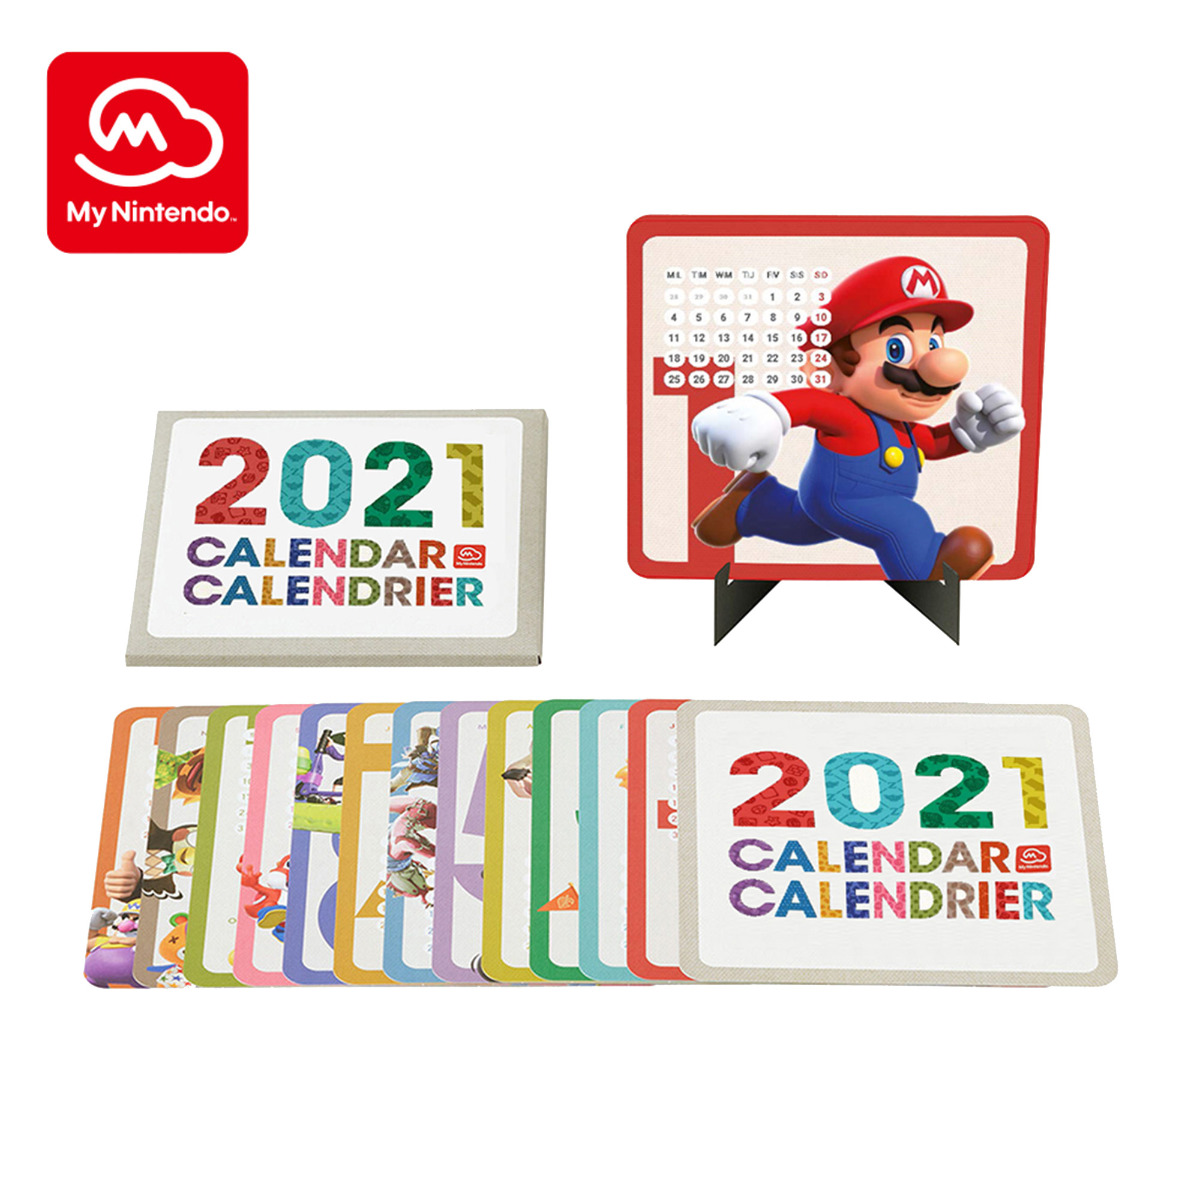 My Nintendo adds Mario & Luigi notebook and 2021 calendar in North America